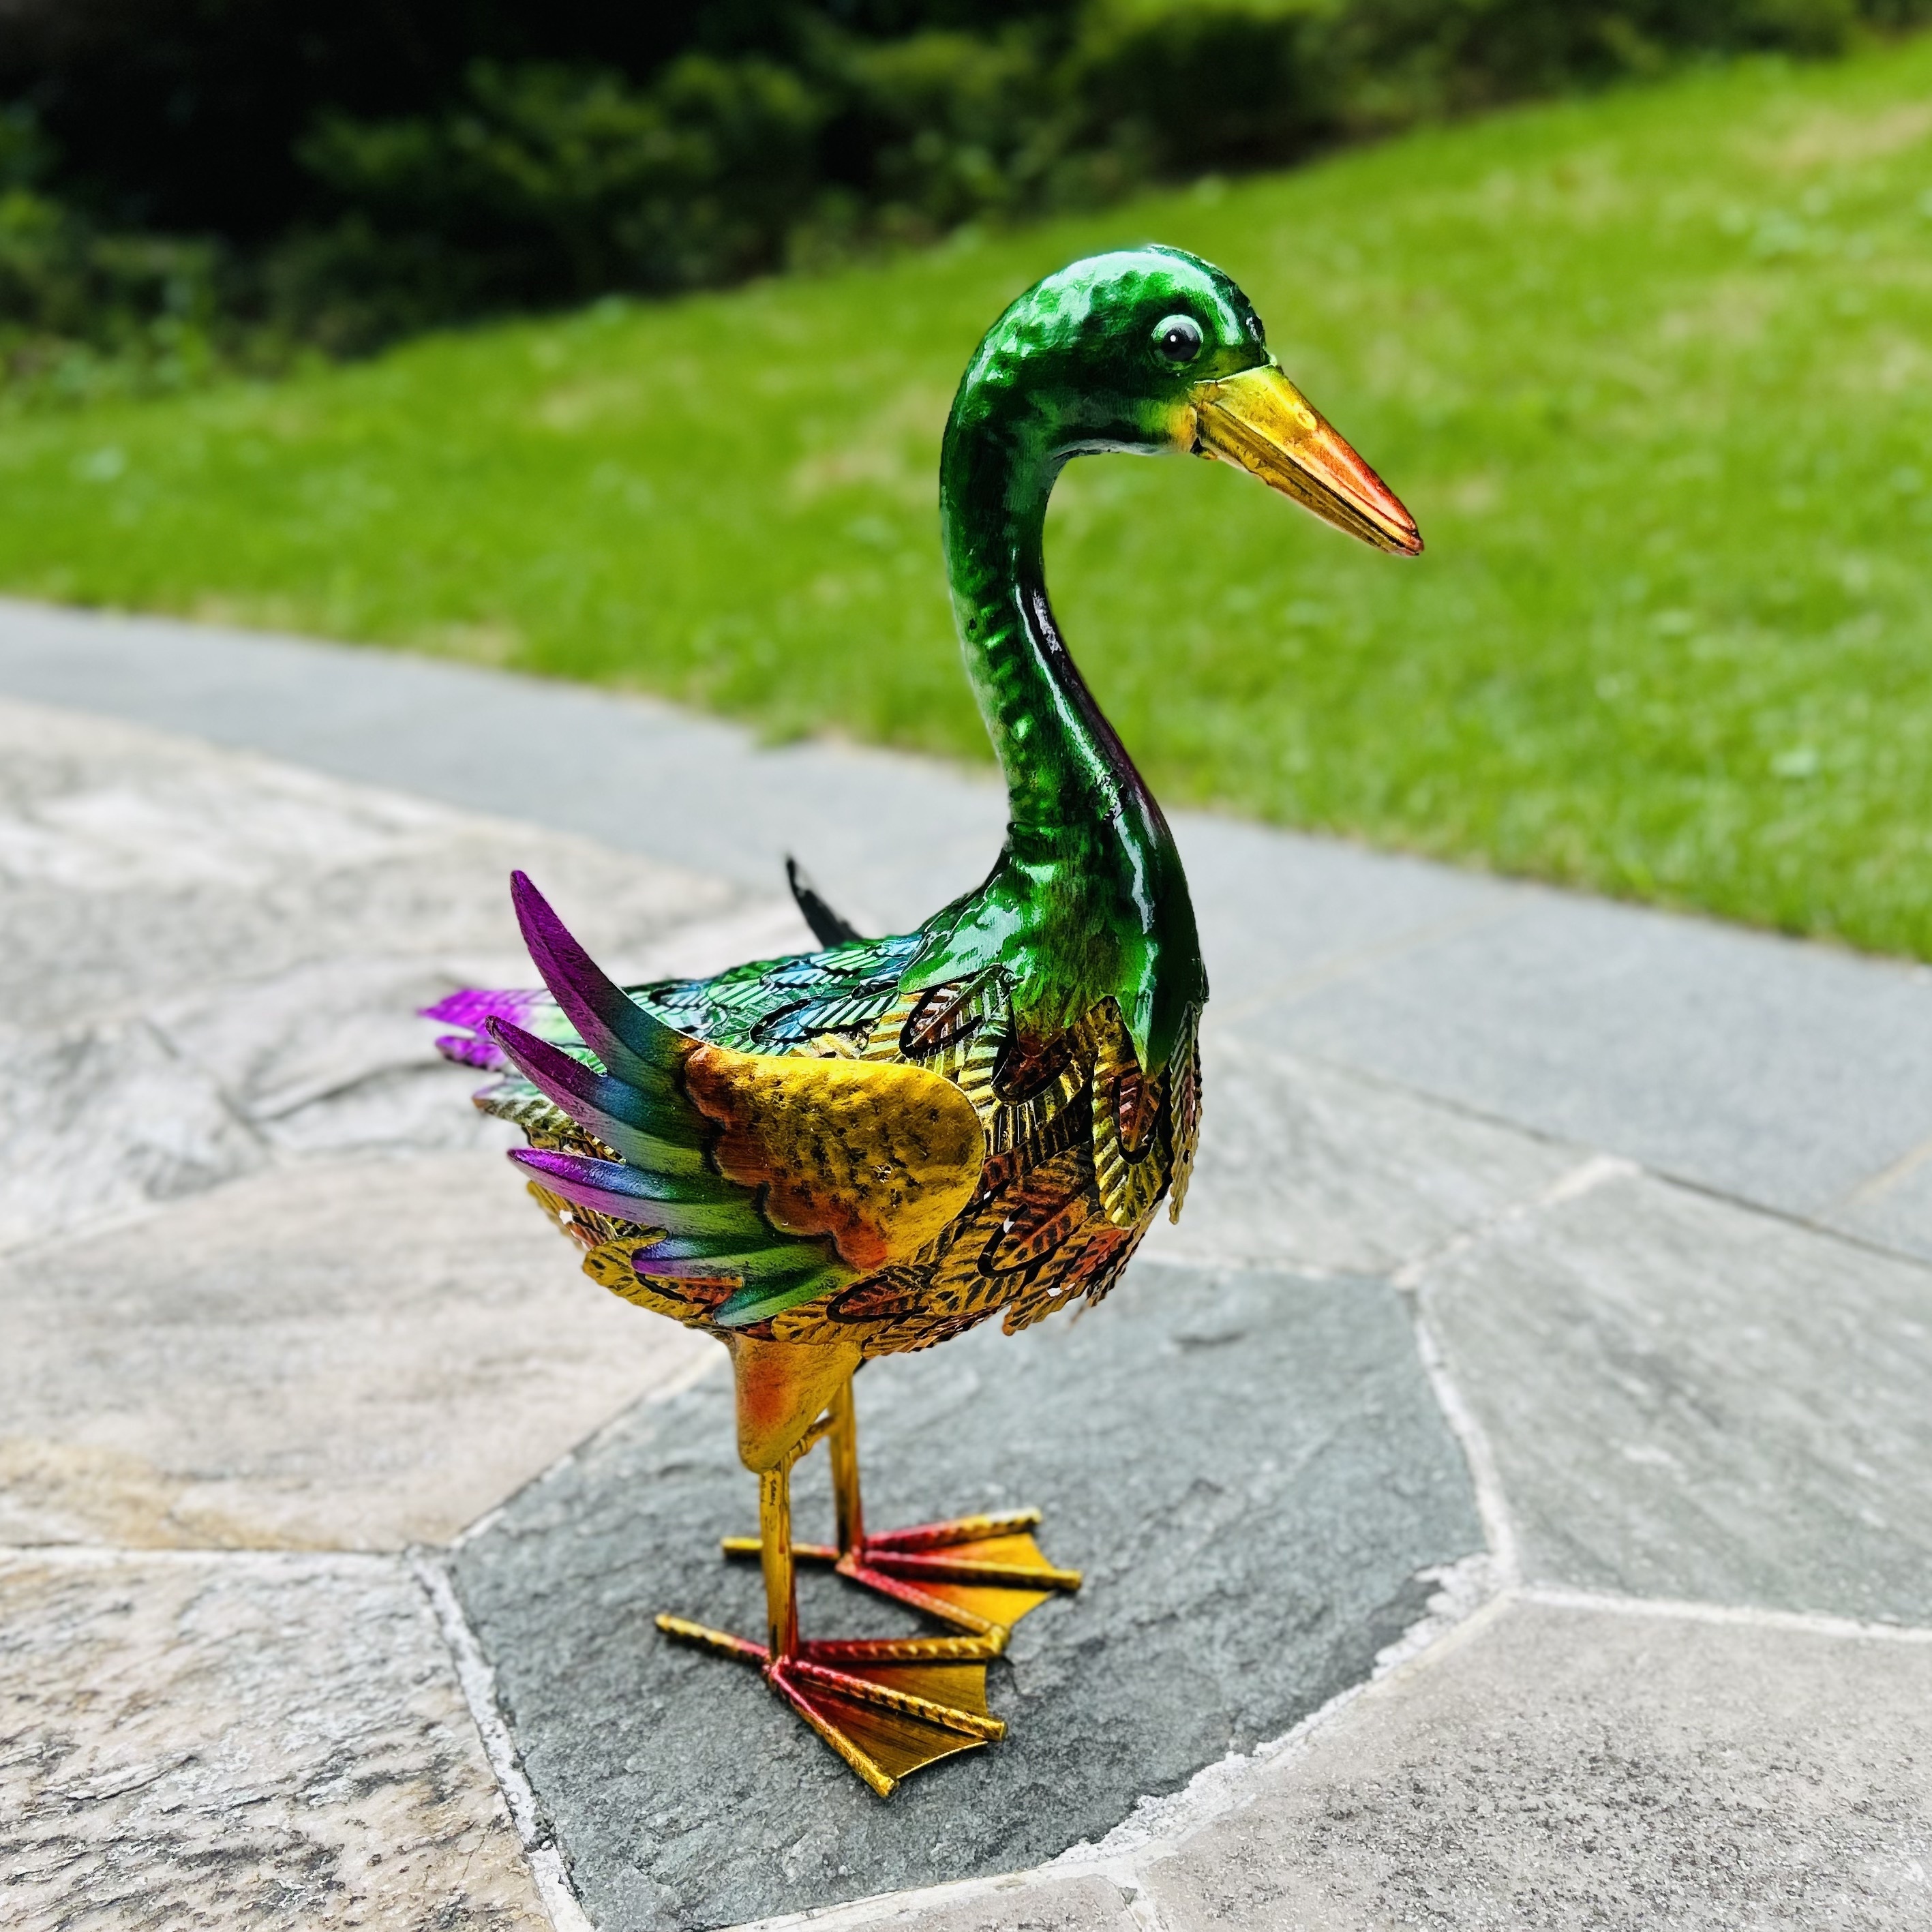 

Contemporary 14inch Metal Duck Statue, Colorful Garden Sculpture, Easter Decorative Outdoor Animal Figurine, Floor Mounted Metal Art For Yard, Lawn, Patio - Weatherproof, No Battery Needed